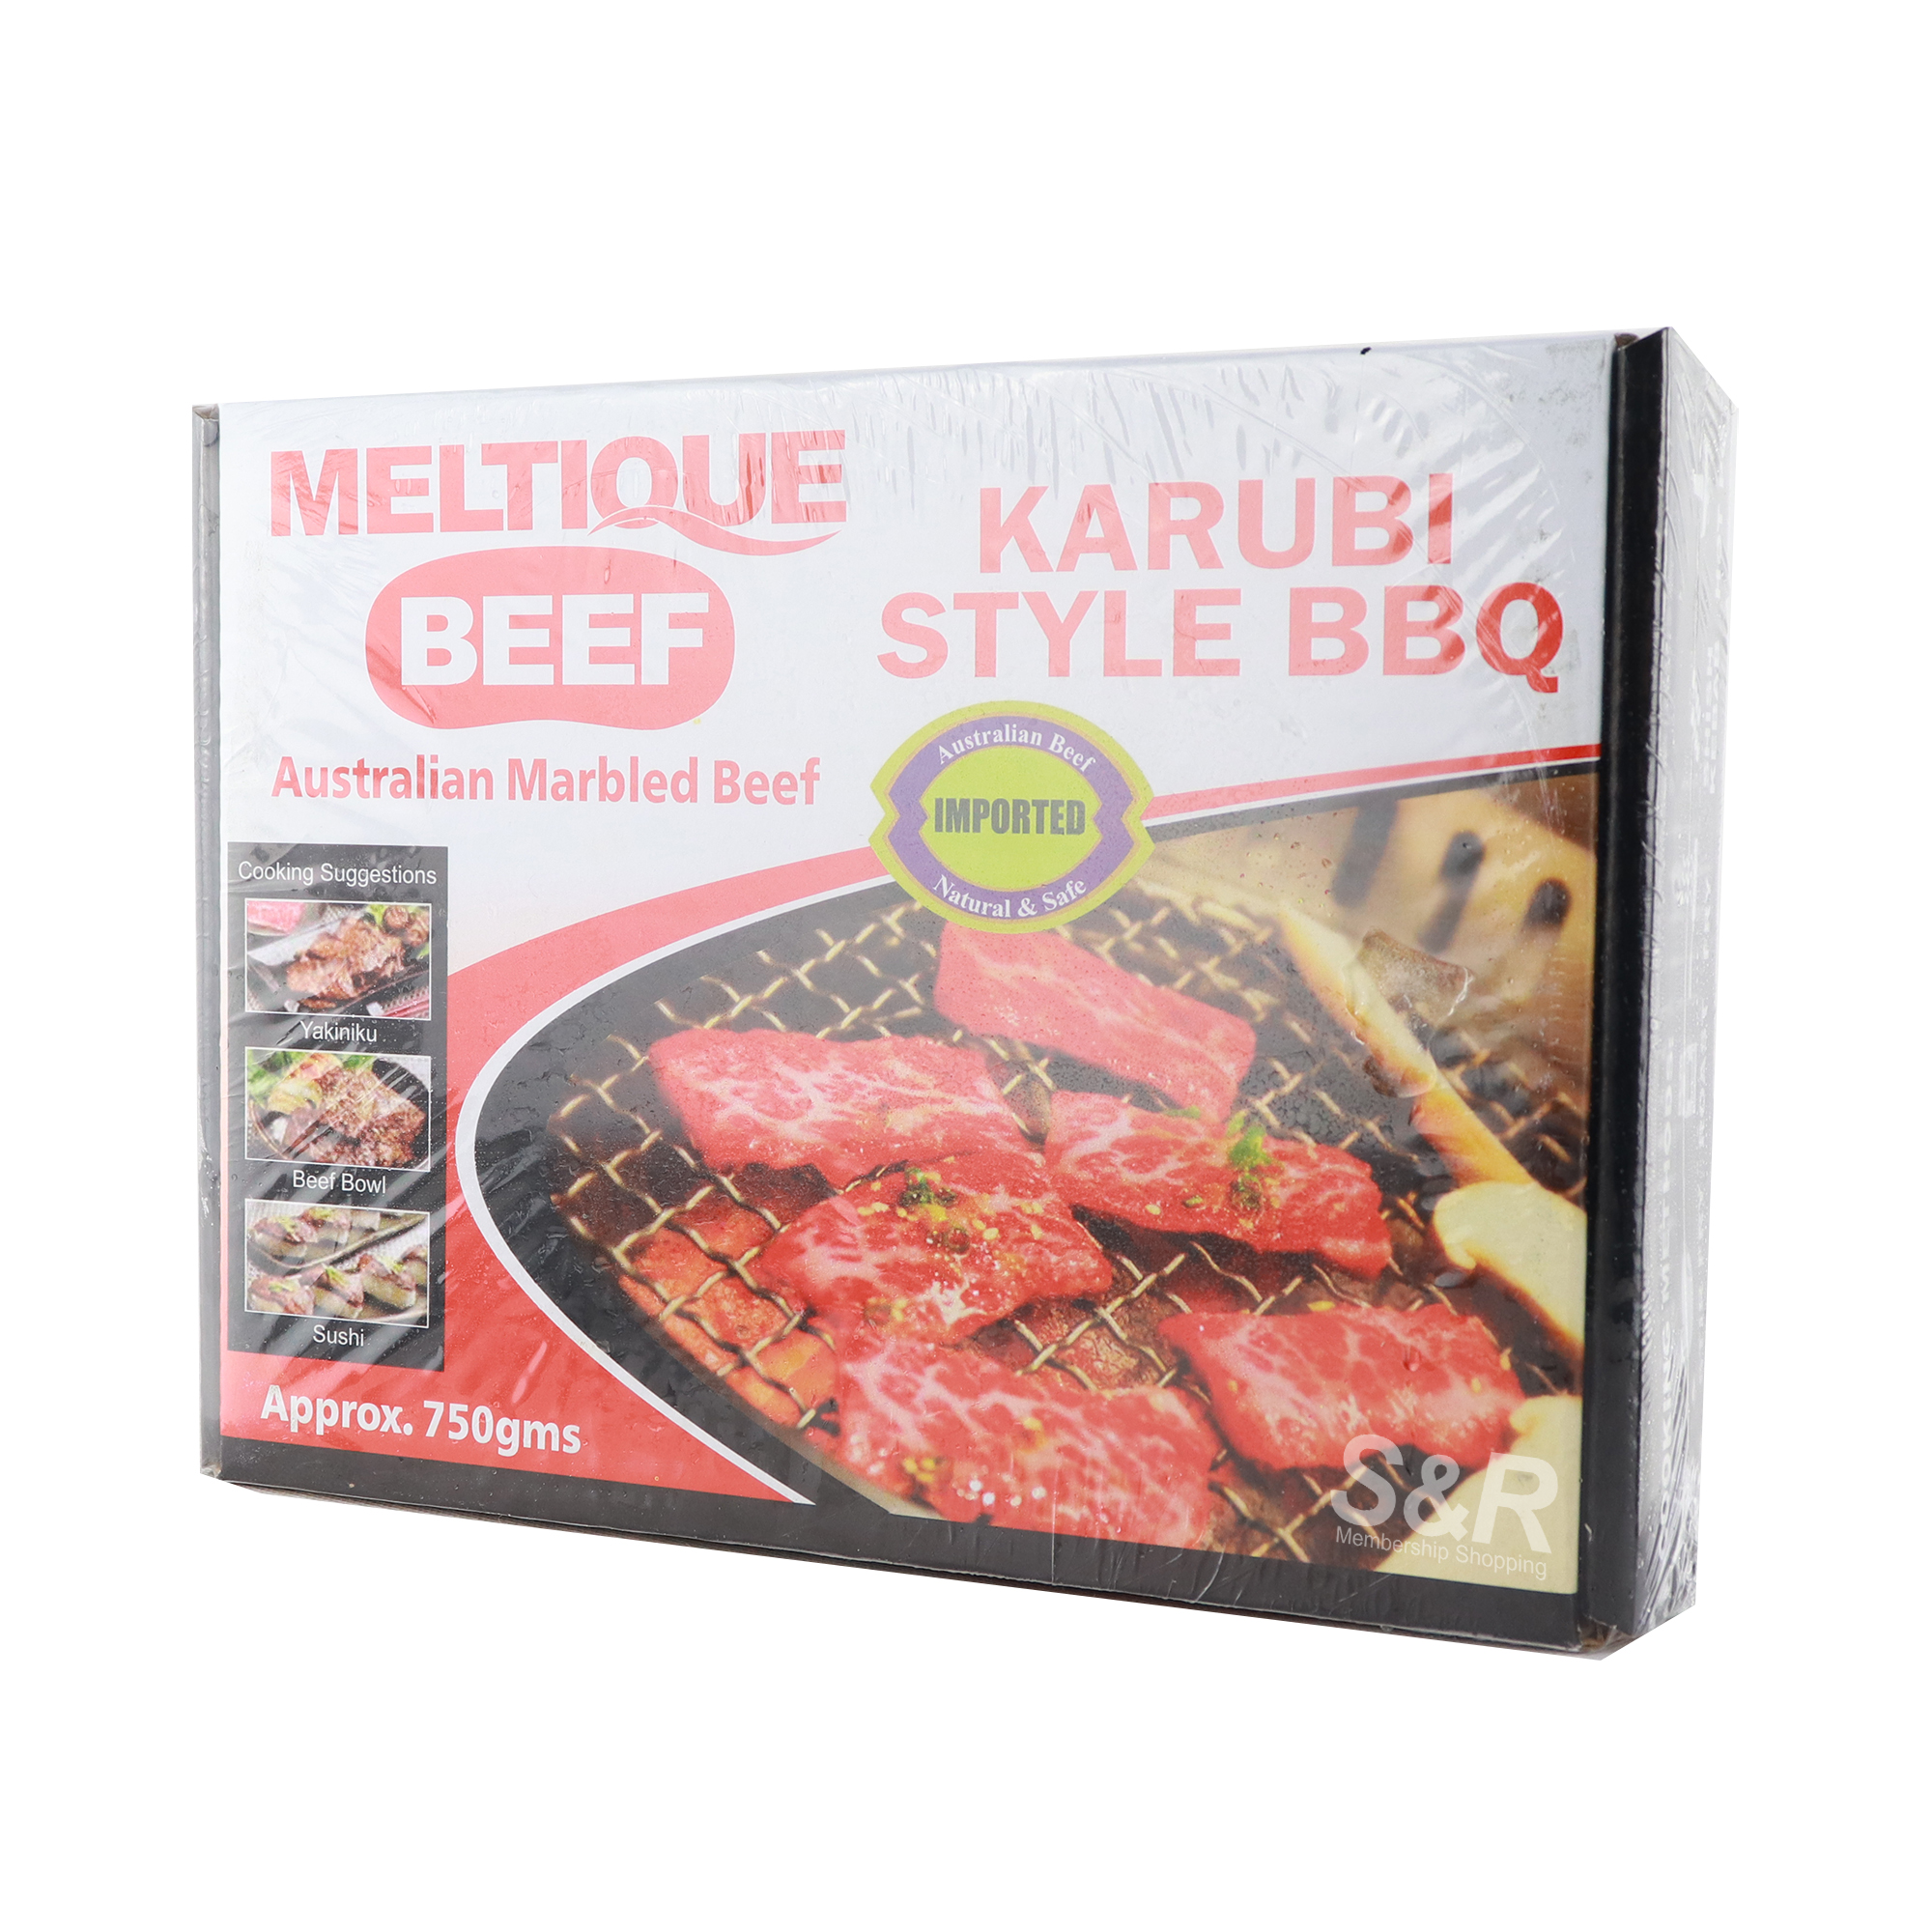 Australian Marbled Beef Karubi Style BBQ